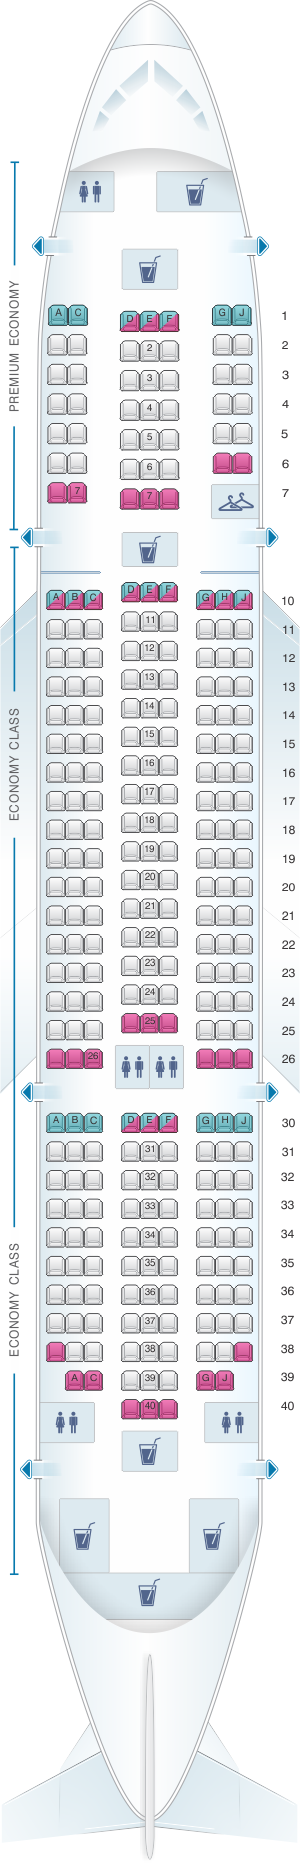 38 Seat Map Boeing 787 Dreamliner Tui